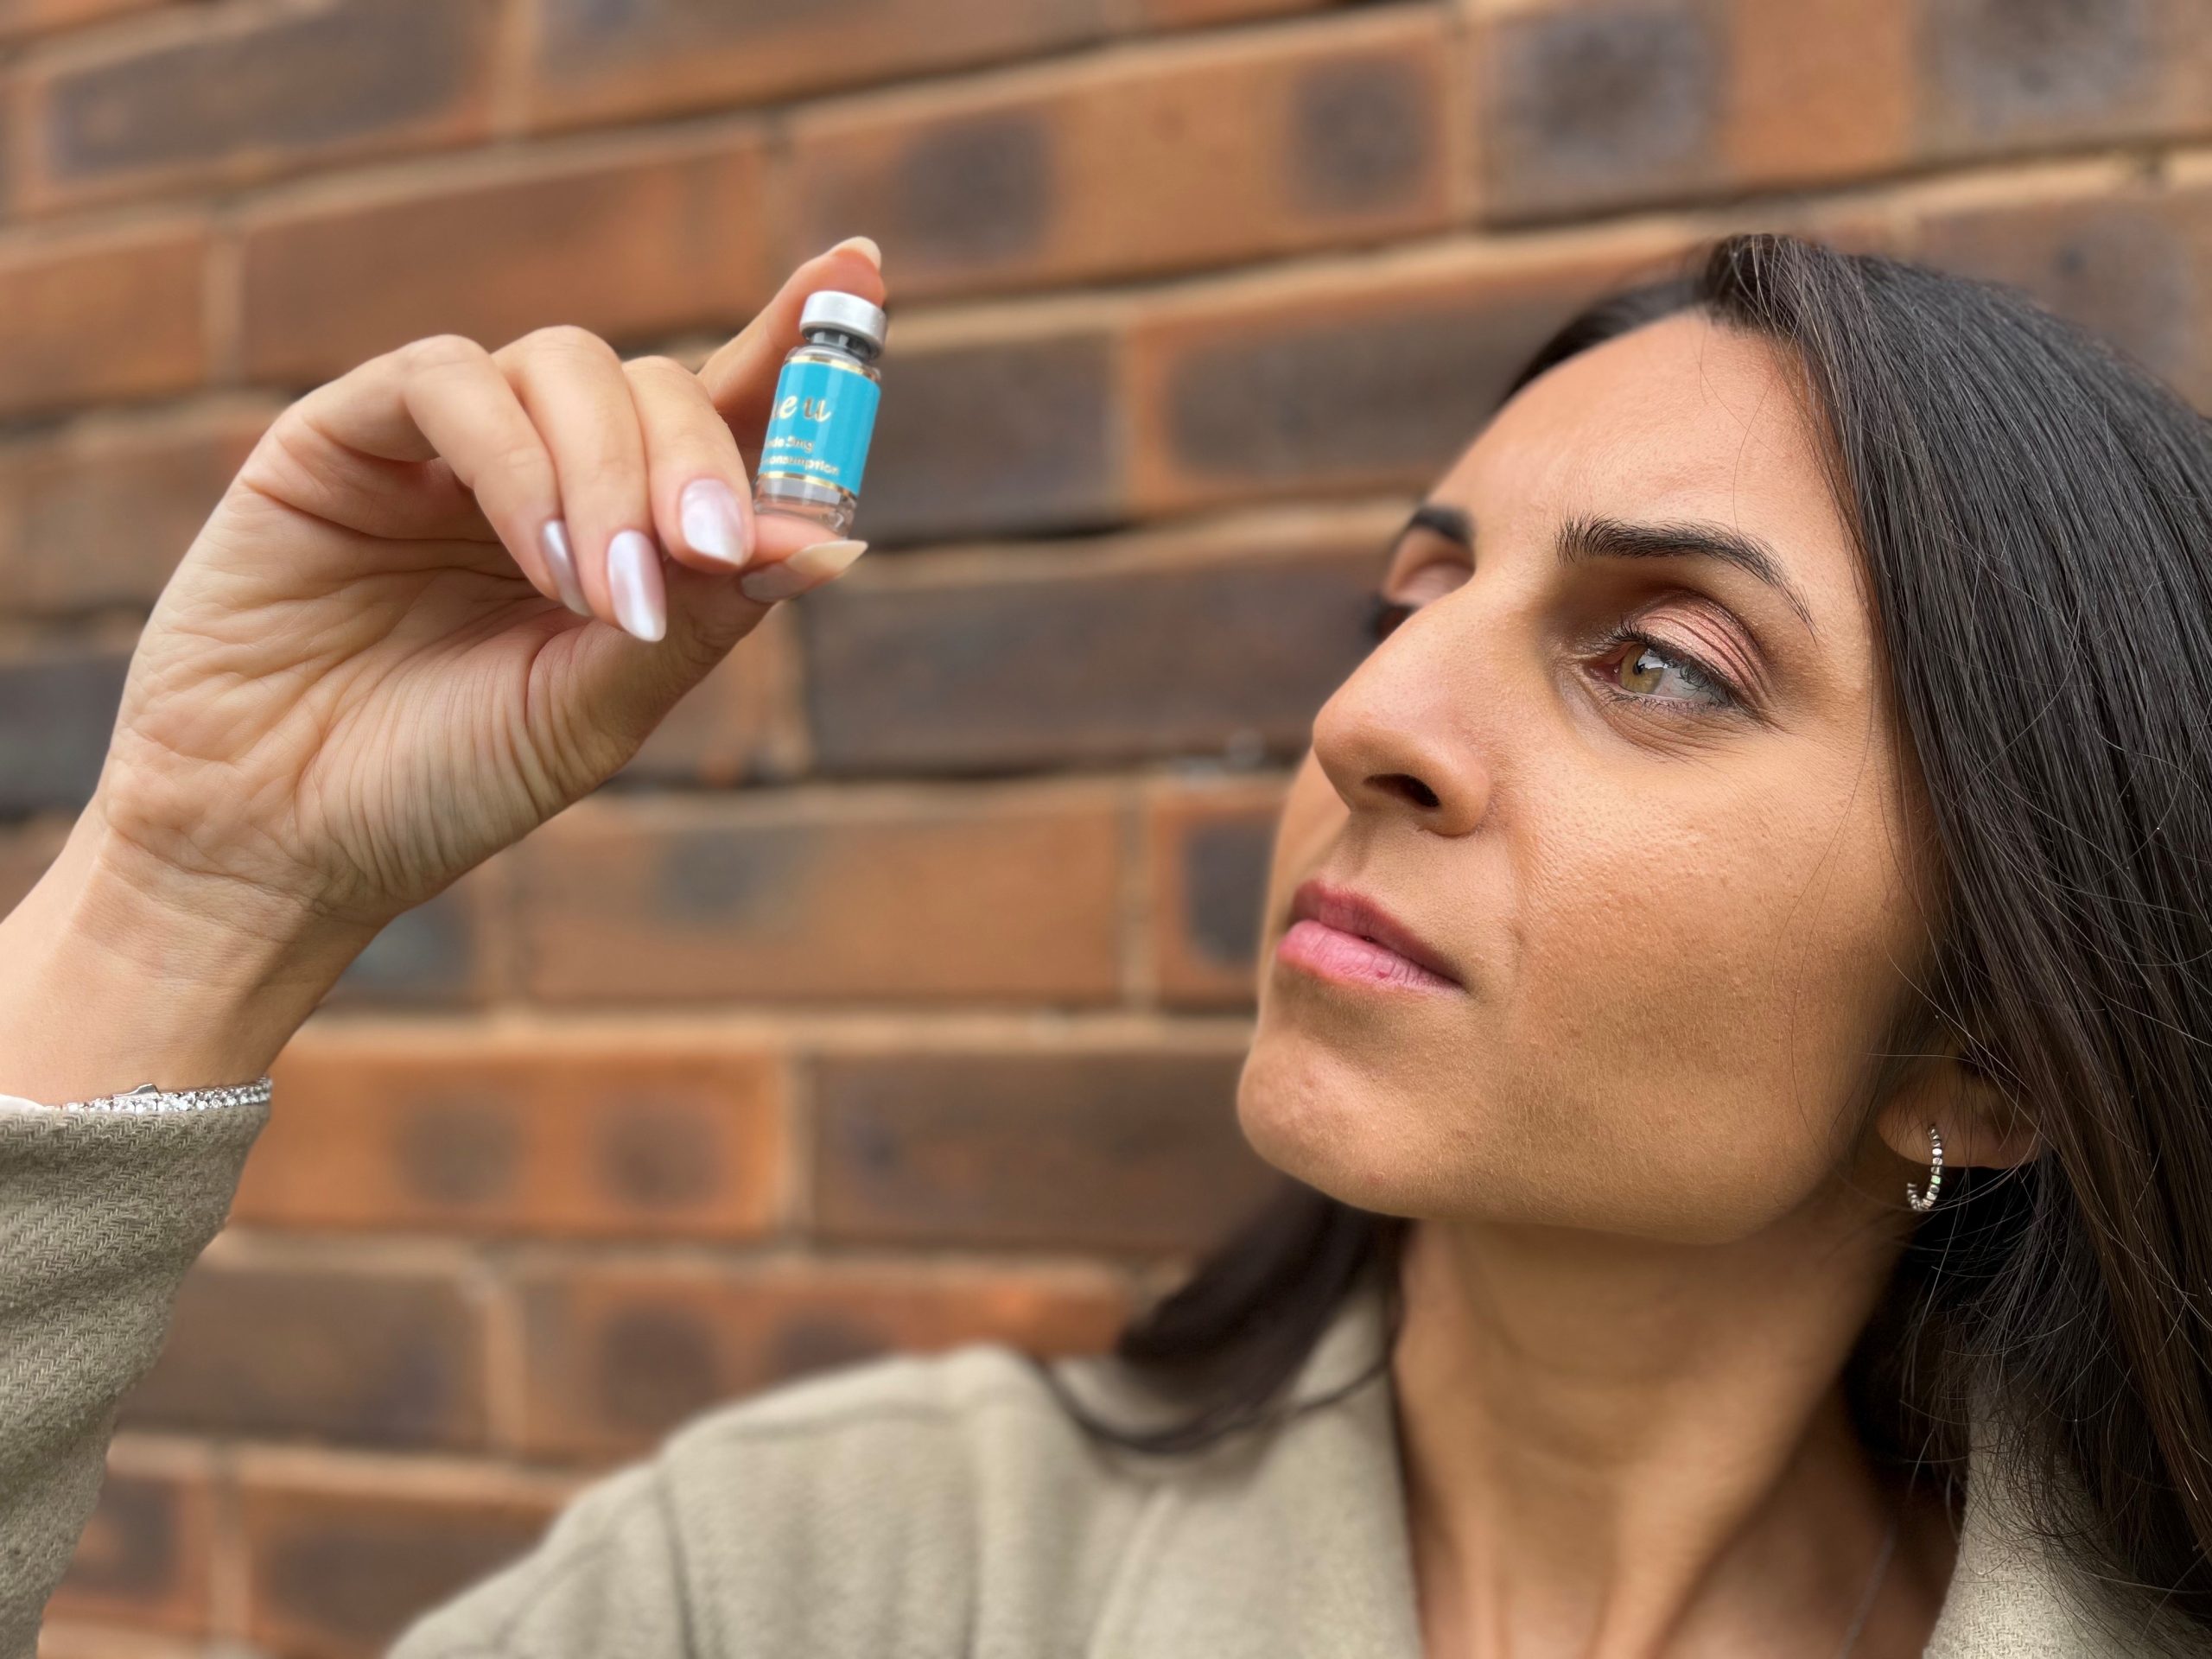 Journalist Pria looks at a vial of the skinny jab liquid